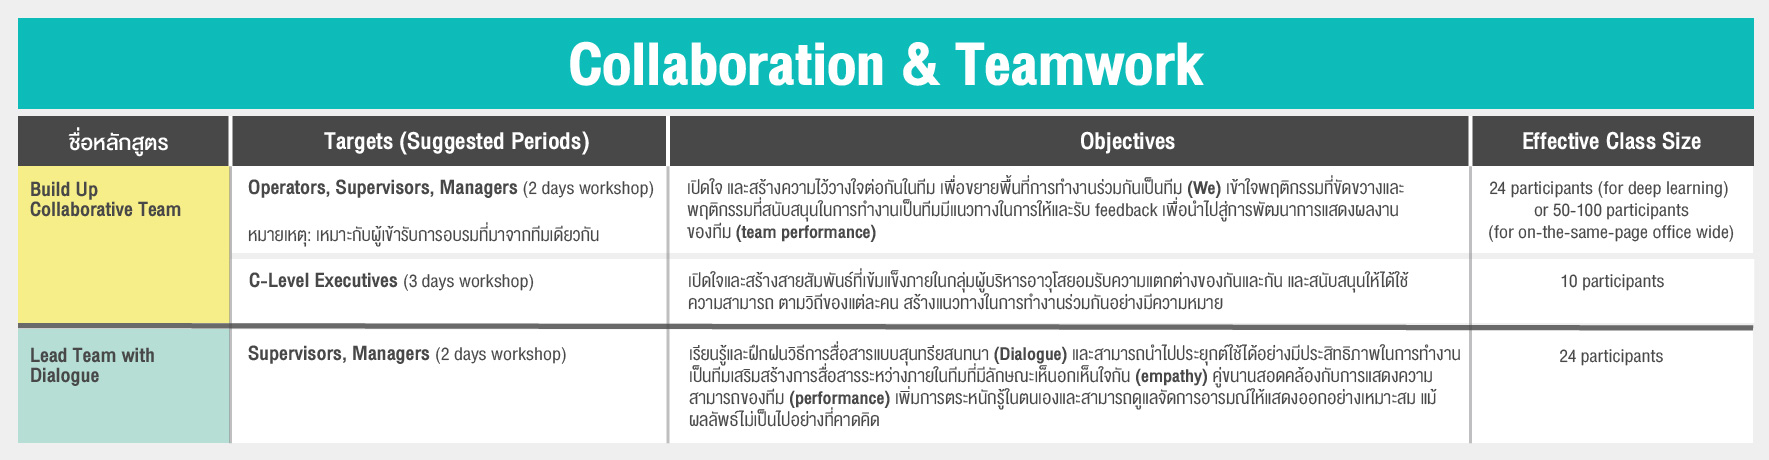 Collaboration & Teamwork